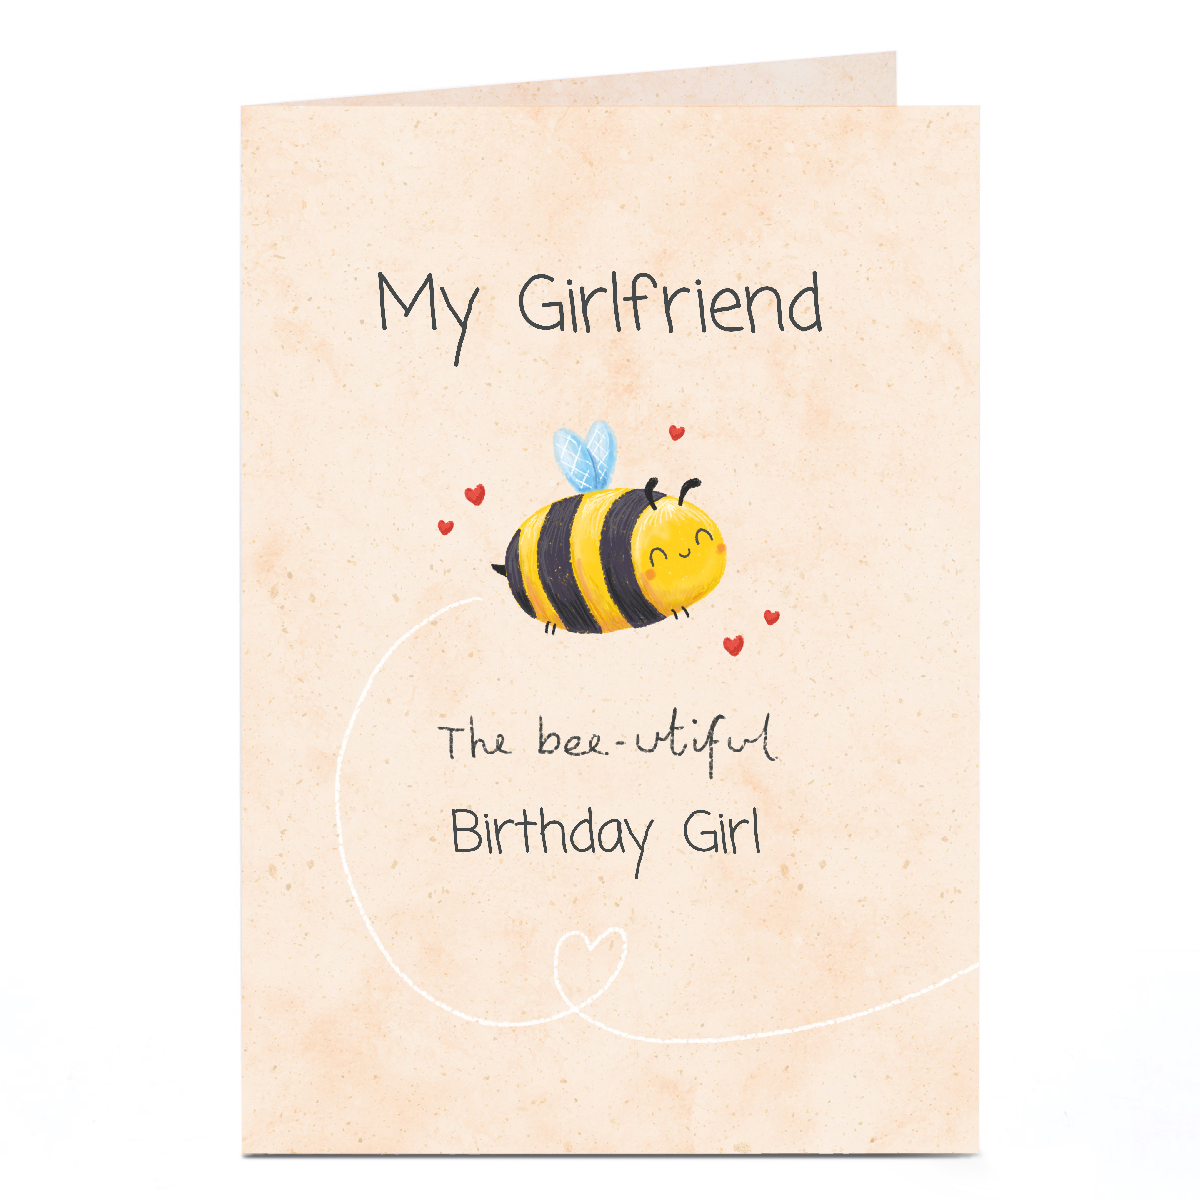 Personalised Birthday Card - Bee-utiful Birthday Girl - Girlfriend